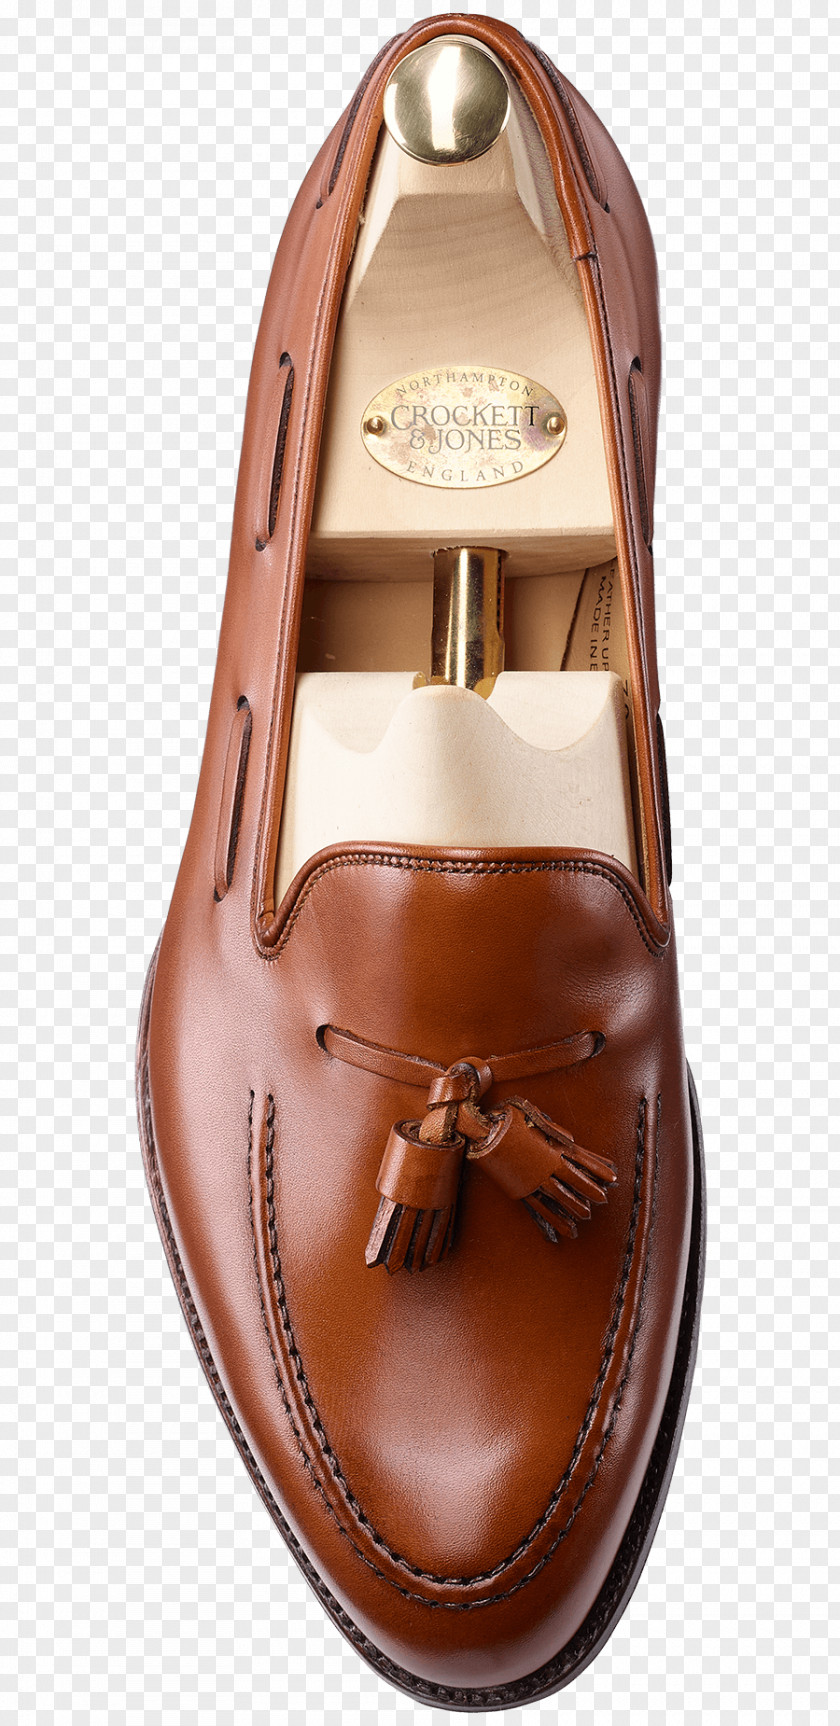 Goodyear Welt Shoe Crockett & Jones Leather Boot PNG